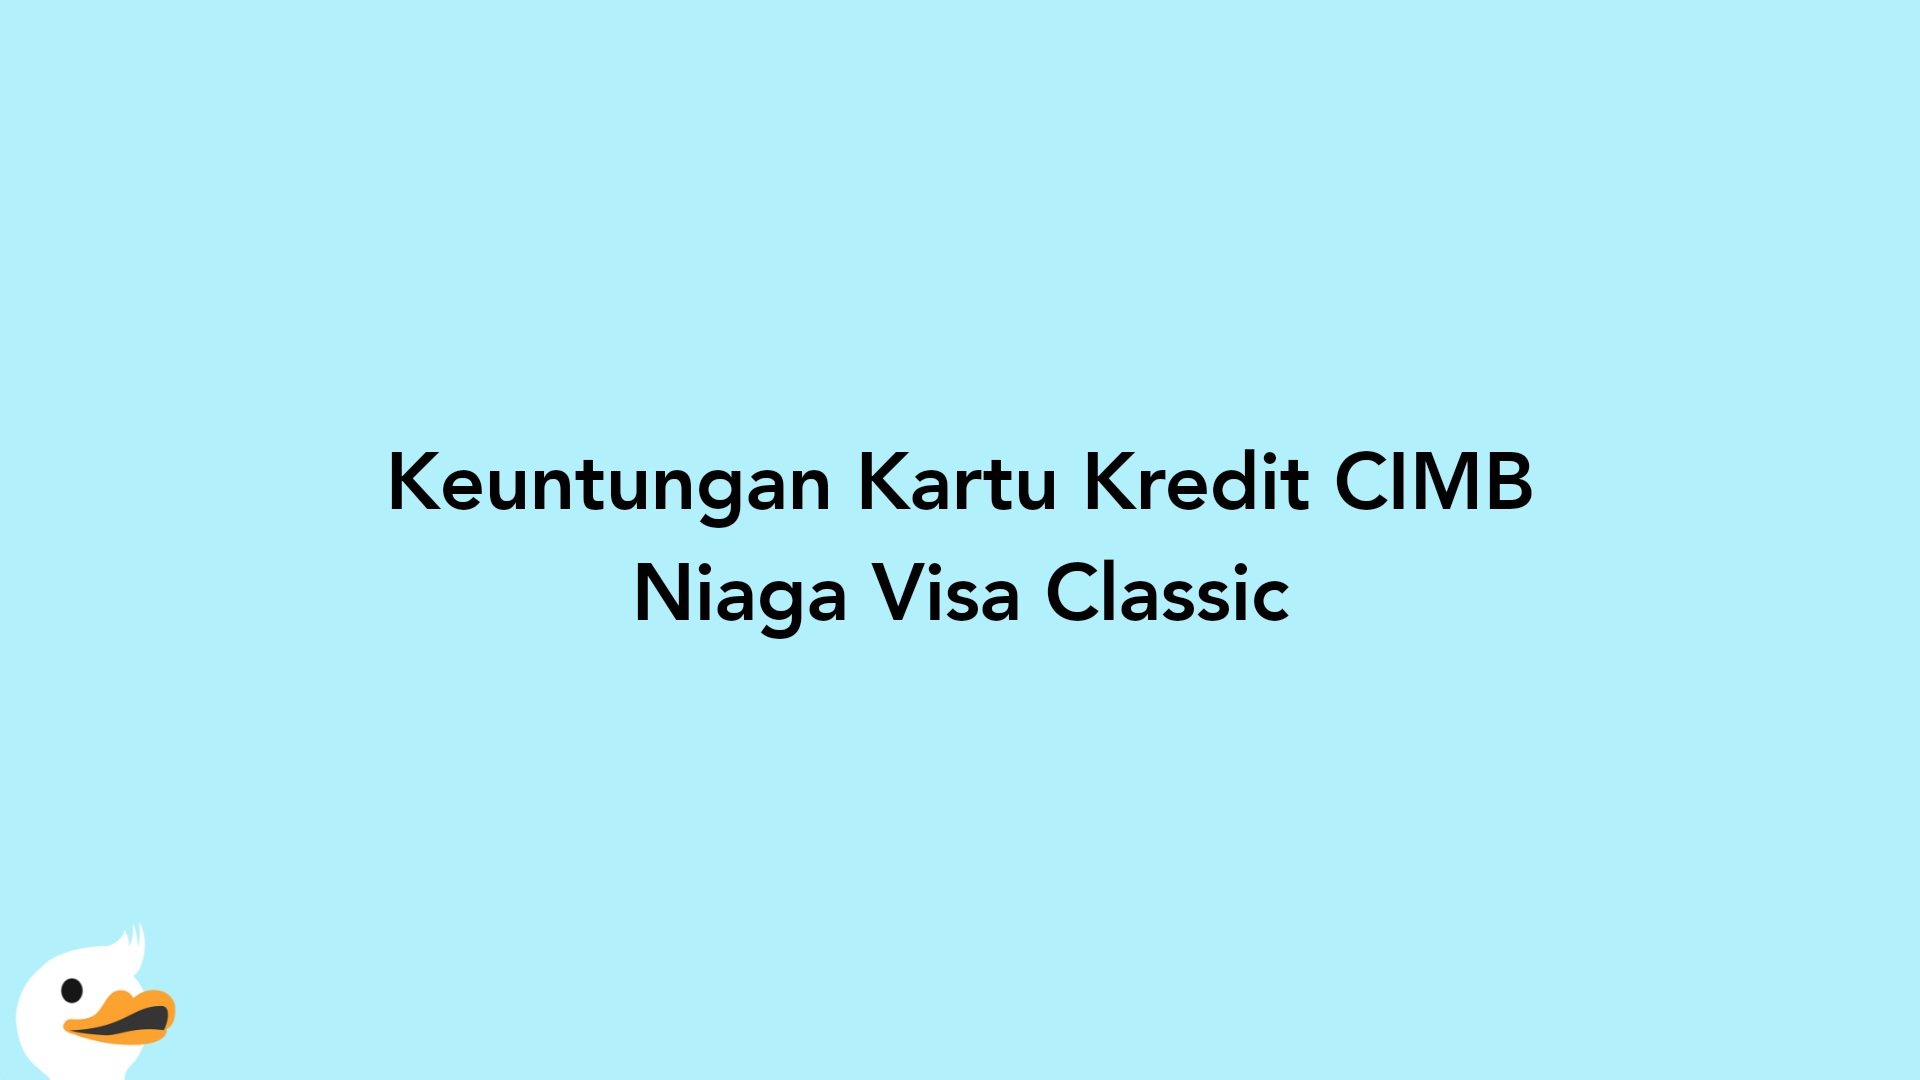 Keuntungan Kartu Kredit CIMB Niaga Visa Classic